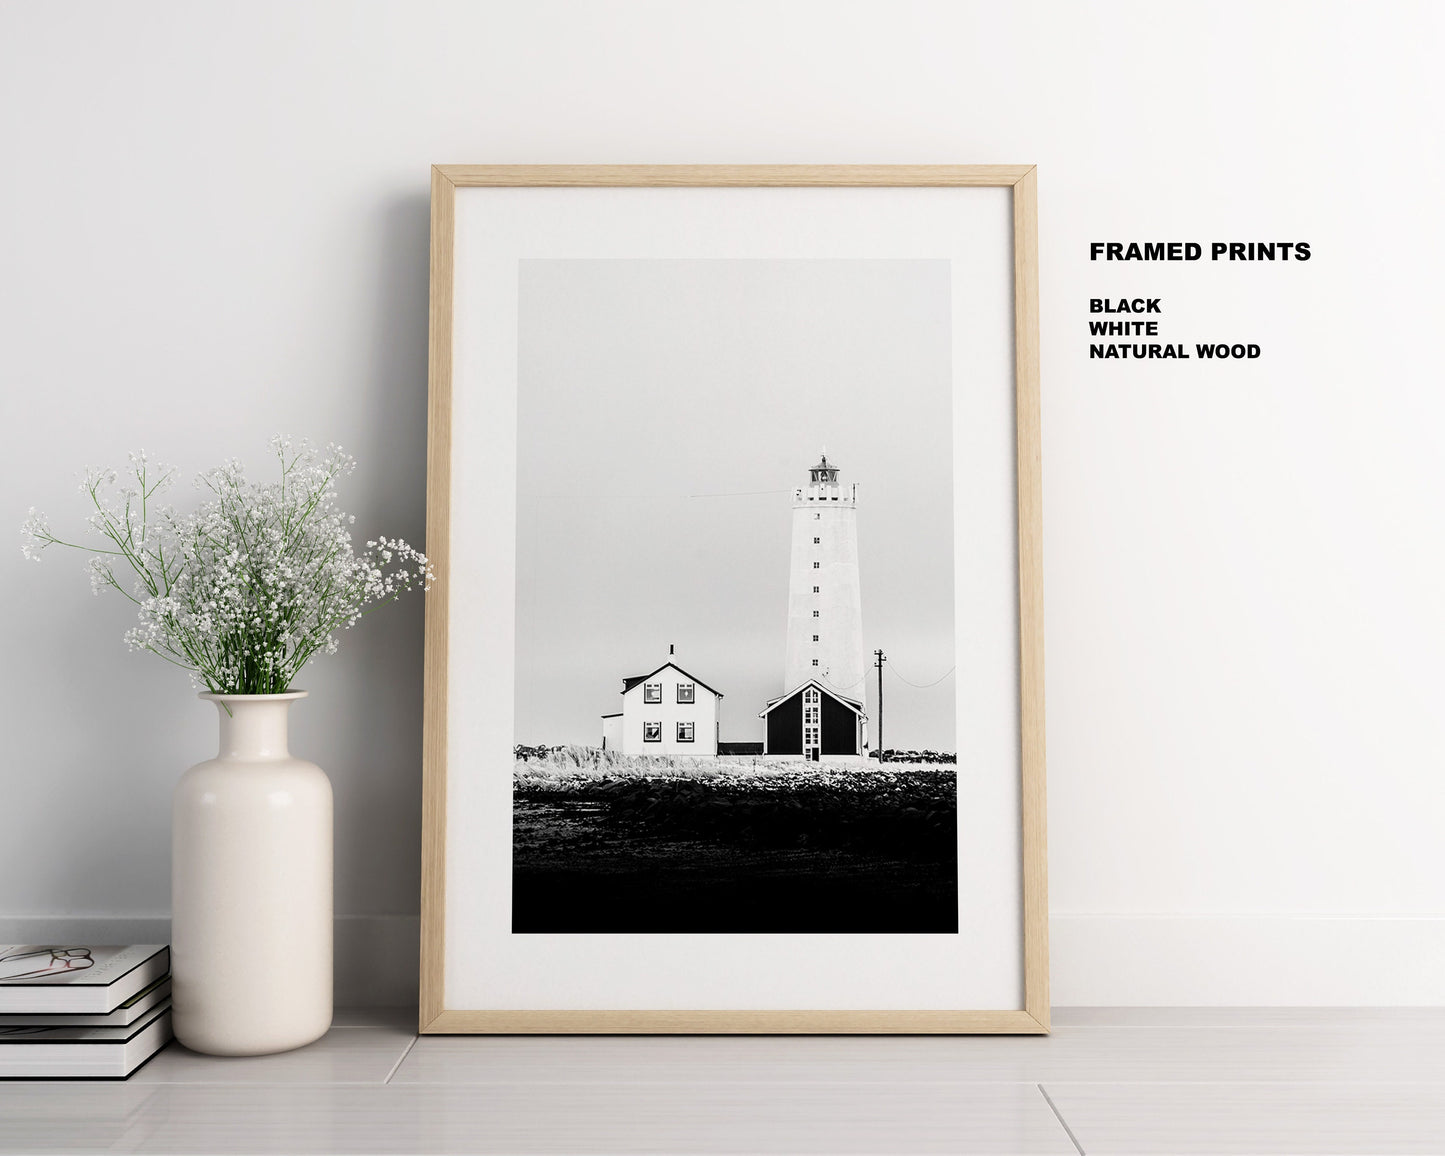 Reykjavik Lighthouse - Iceland Photography Print - Iceland Wall Art - Iceland Poster - Black and White Photography - Lighthouse Print - Gift